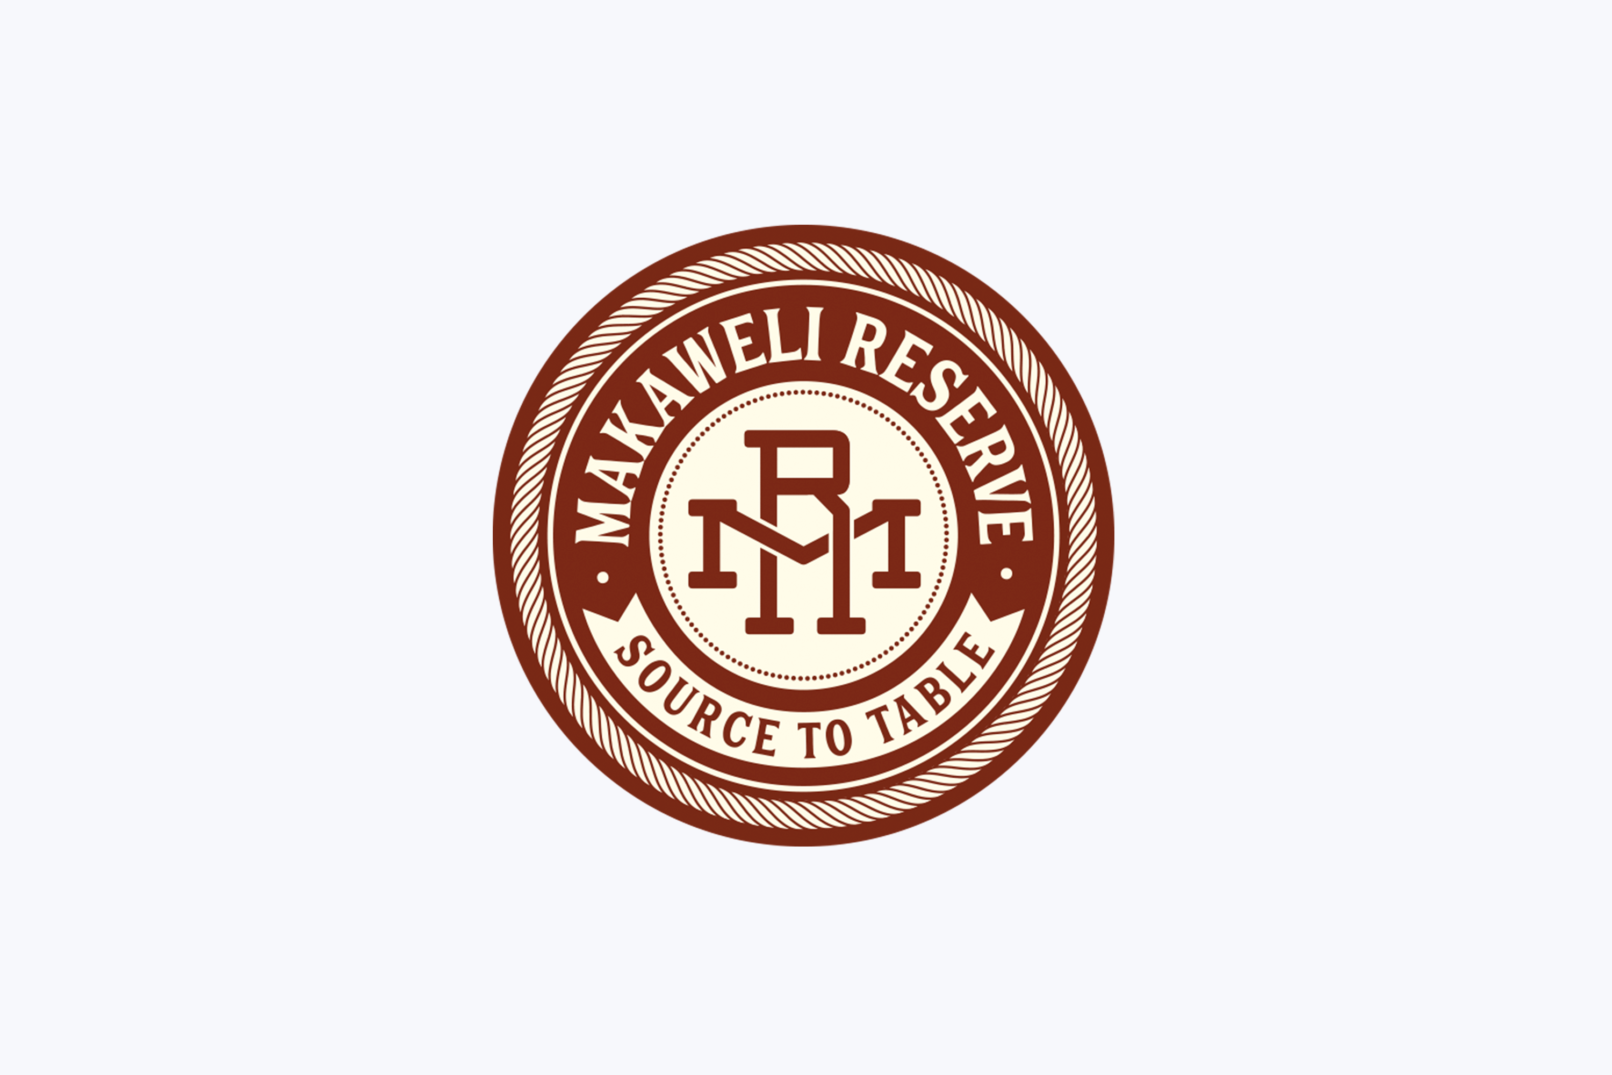 makaweli reserve logo design